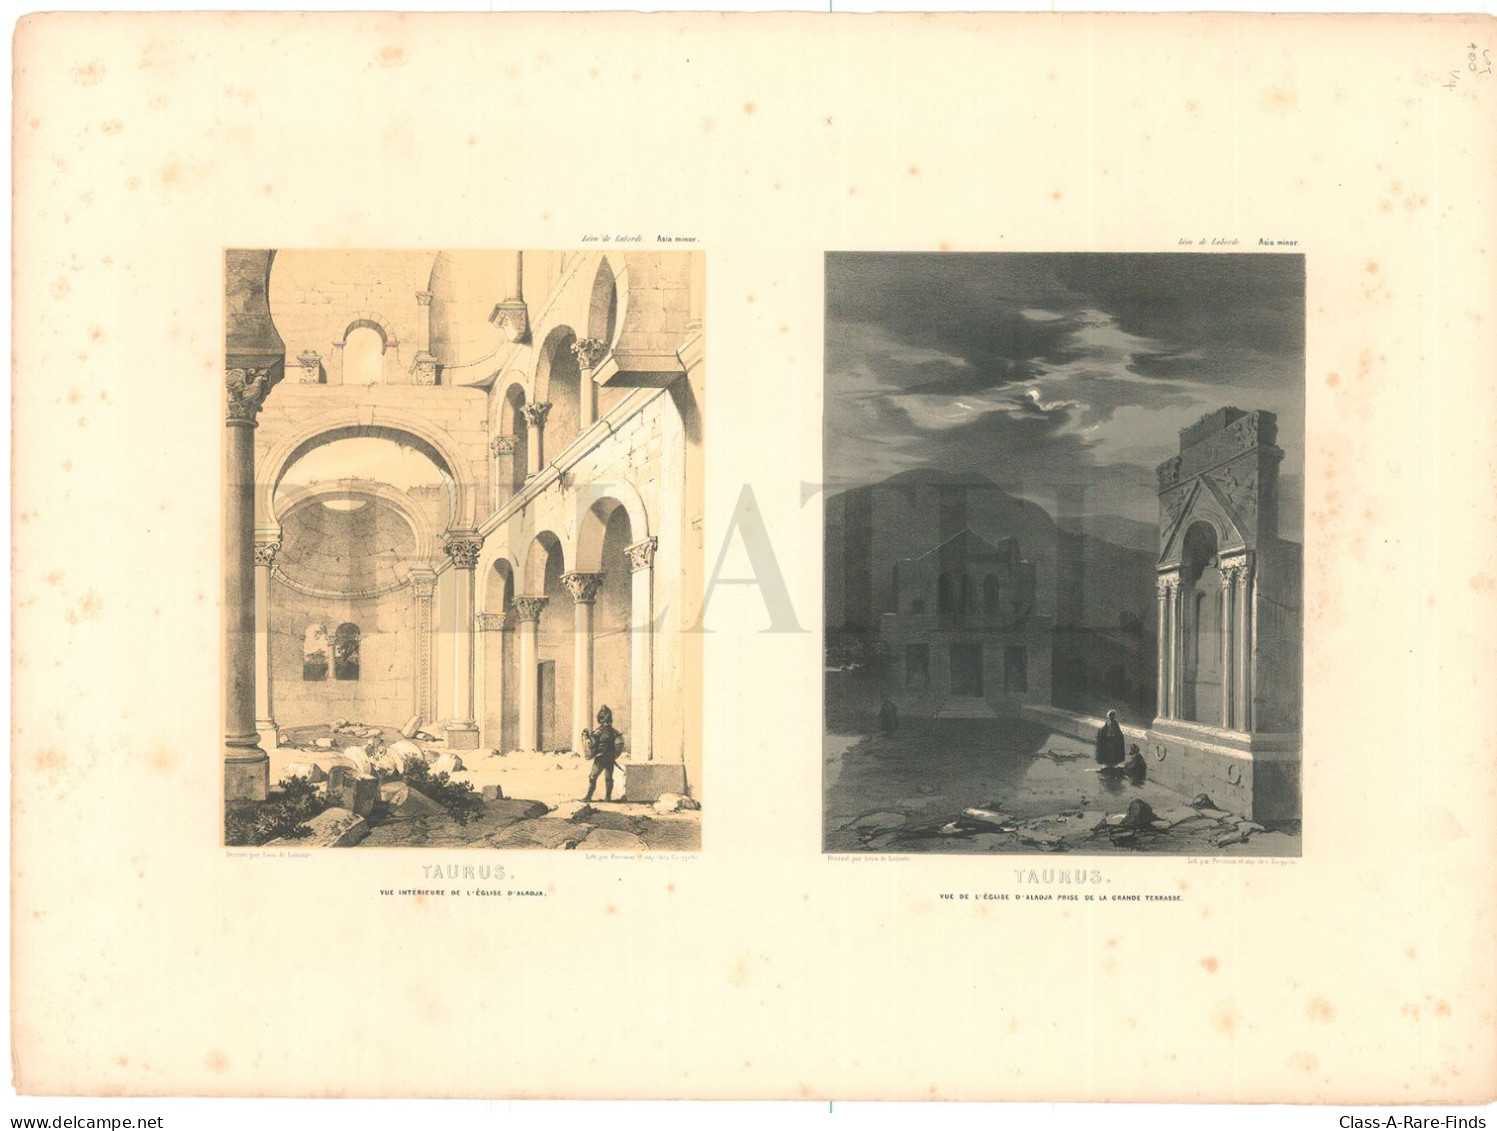 1838, LABORDE: "VOYAGE DE L'ASIE MINEURE" LITOGRAPH PLATE #69. ARCHAEOLOGY / TURKEY / ANATOLIA / SIVAS / ALACA - Archaeology